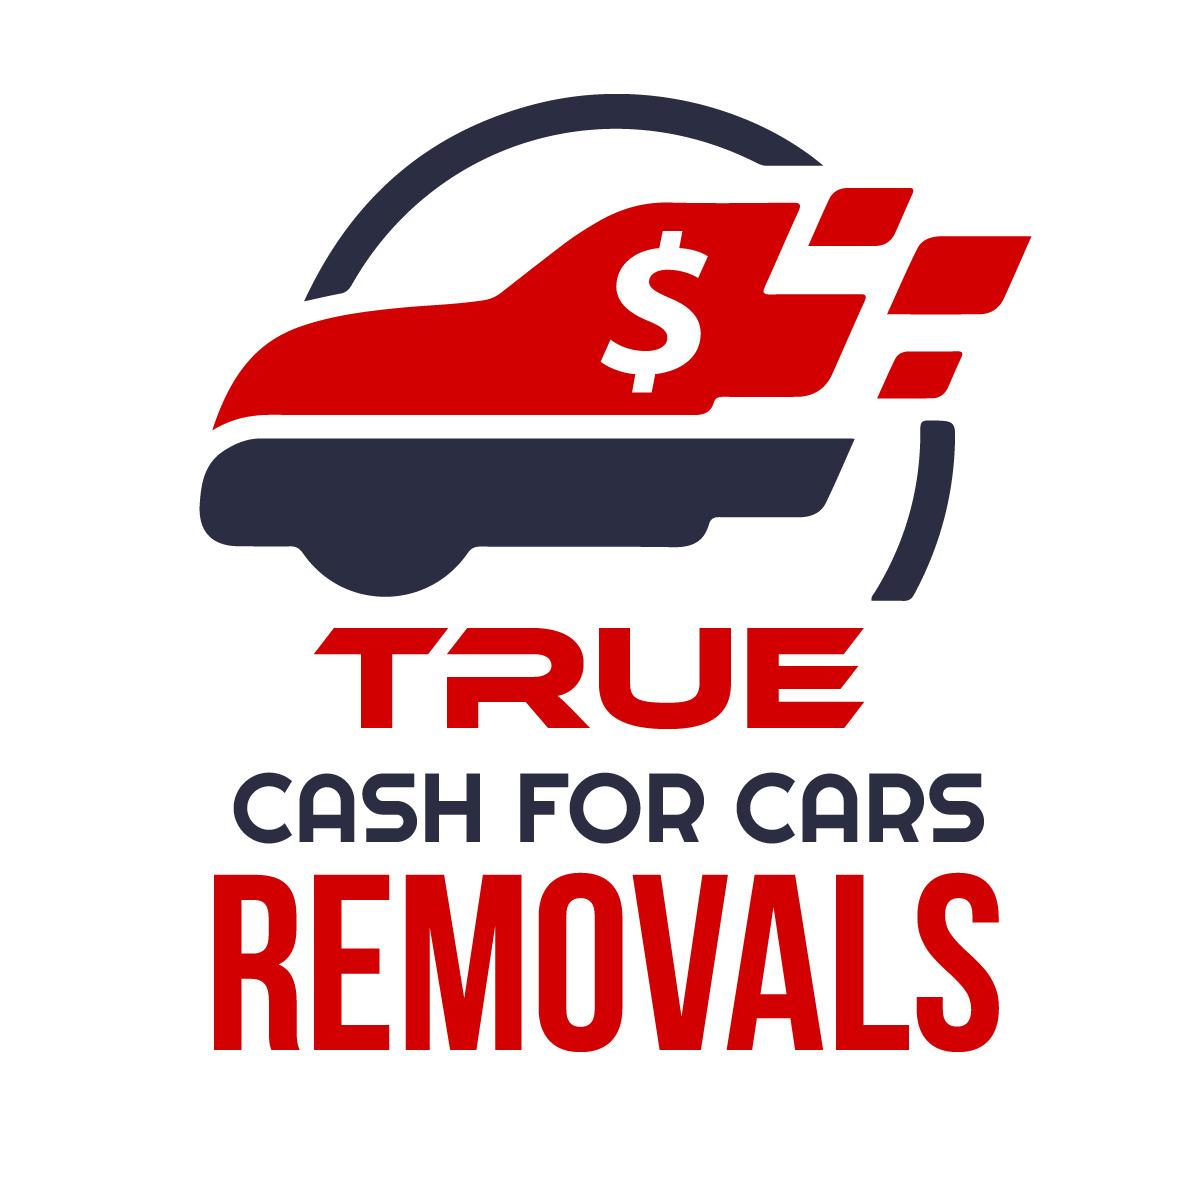 True Cash for Cars Removals - St Albans, VIC 3021 - (03) 9000 8362 | ShowMeLocal.com